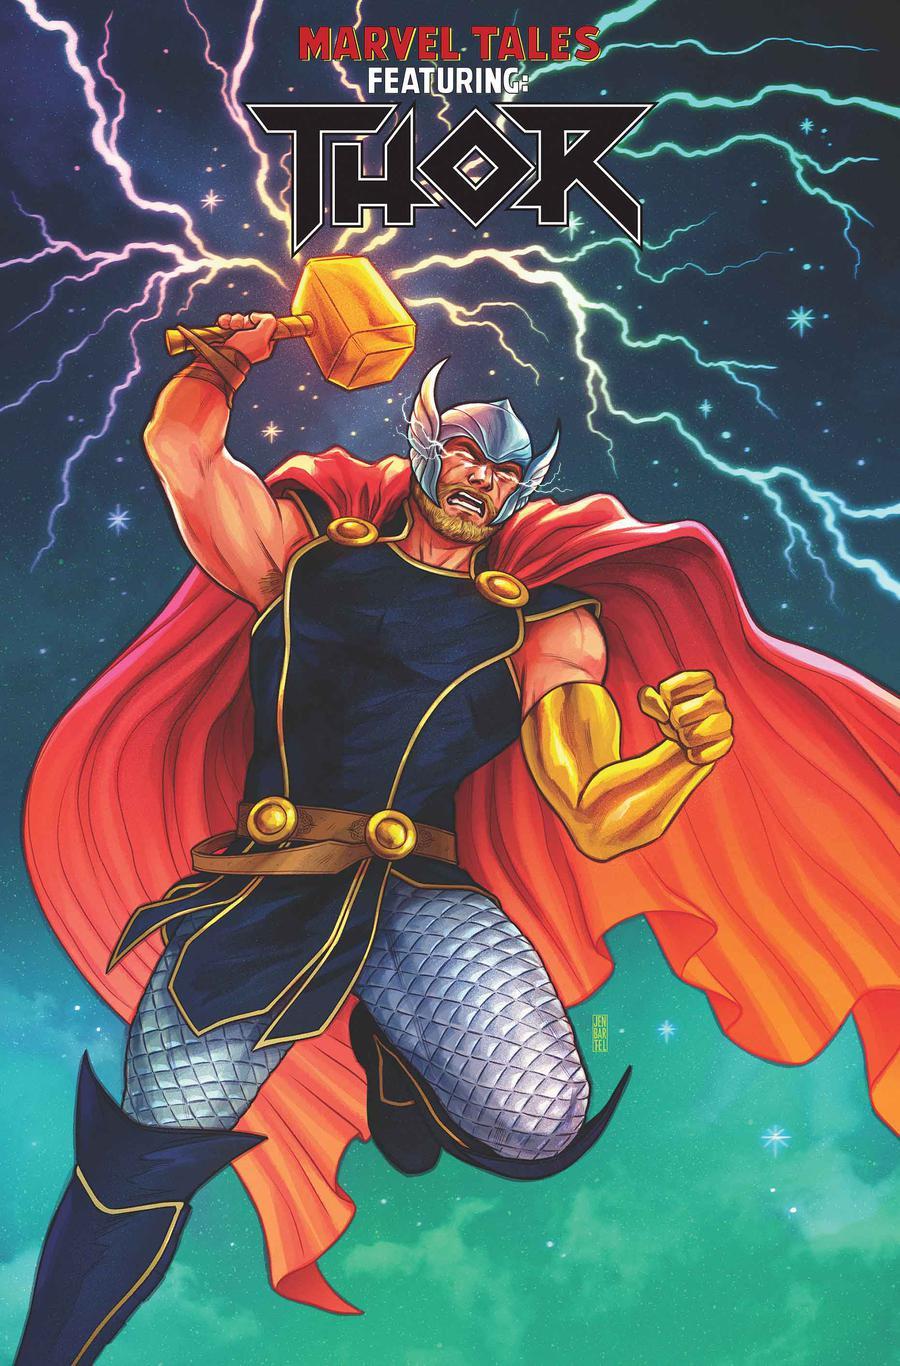 Marvel Tales Thor Vol. 1 #1